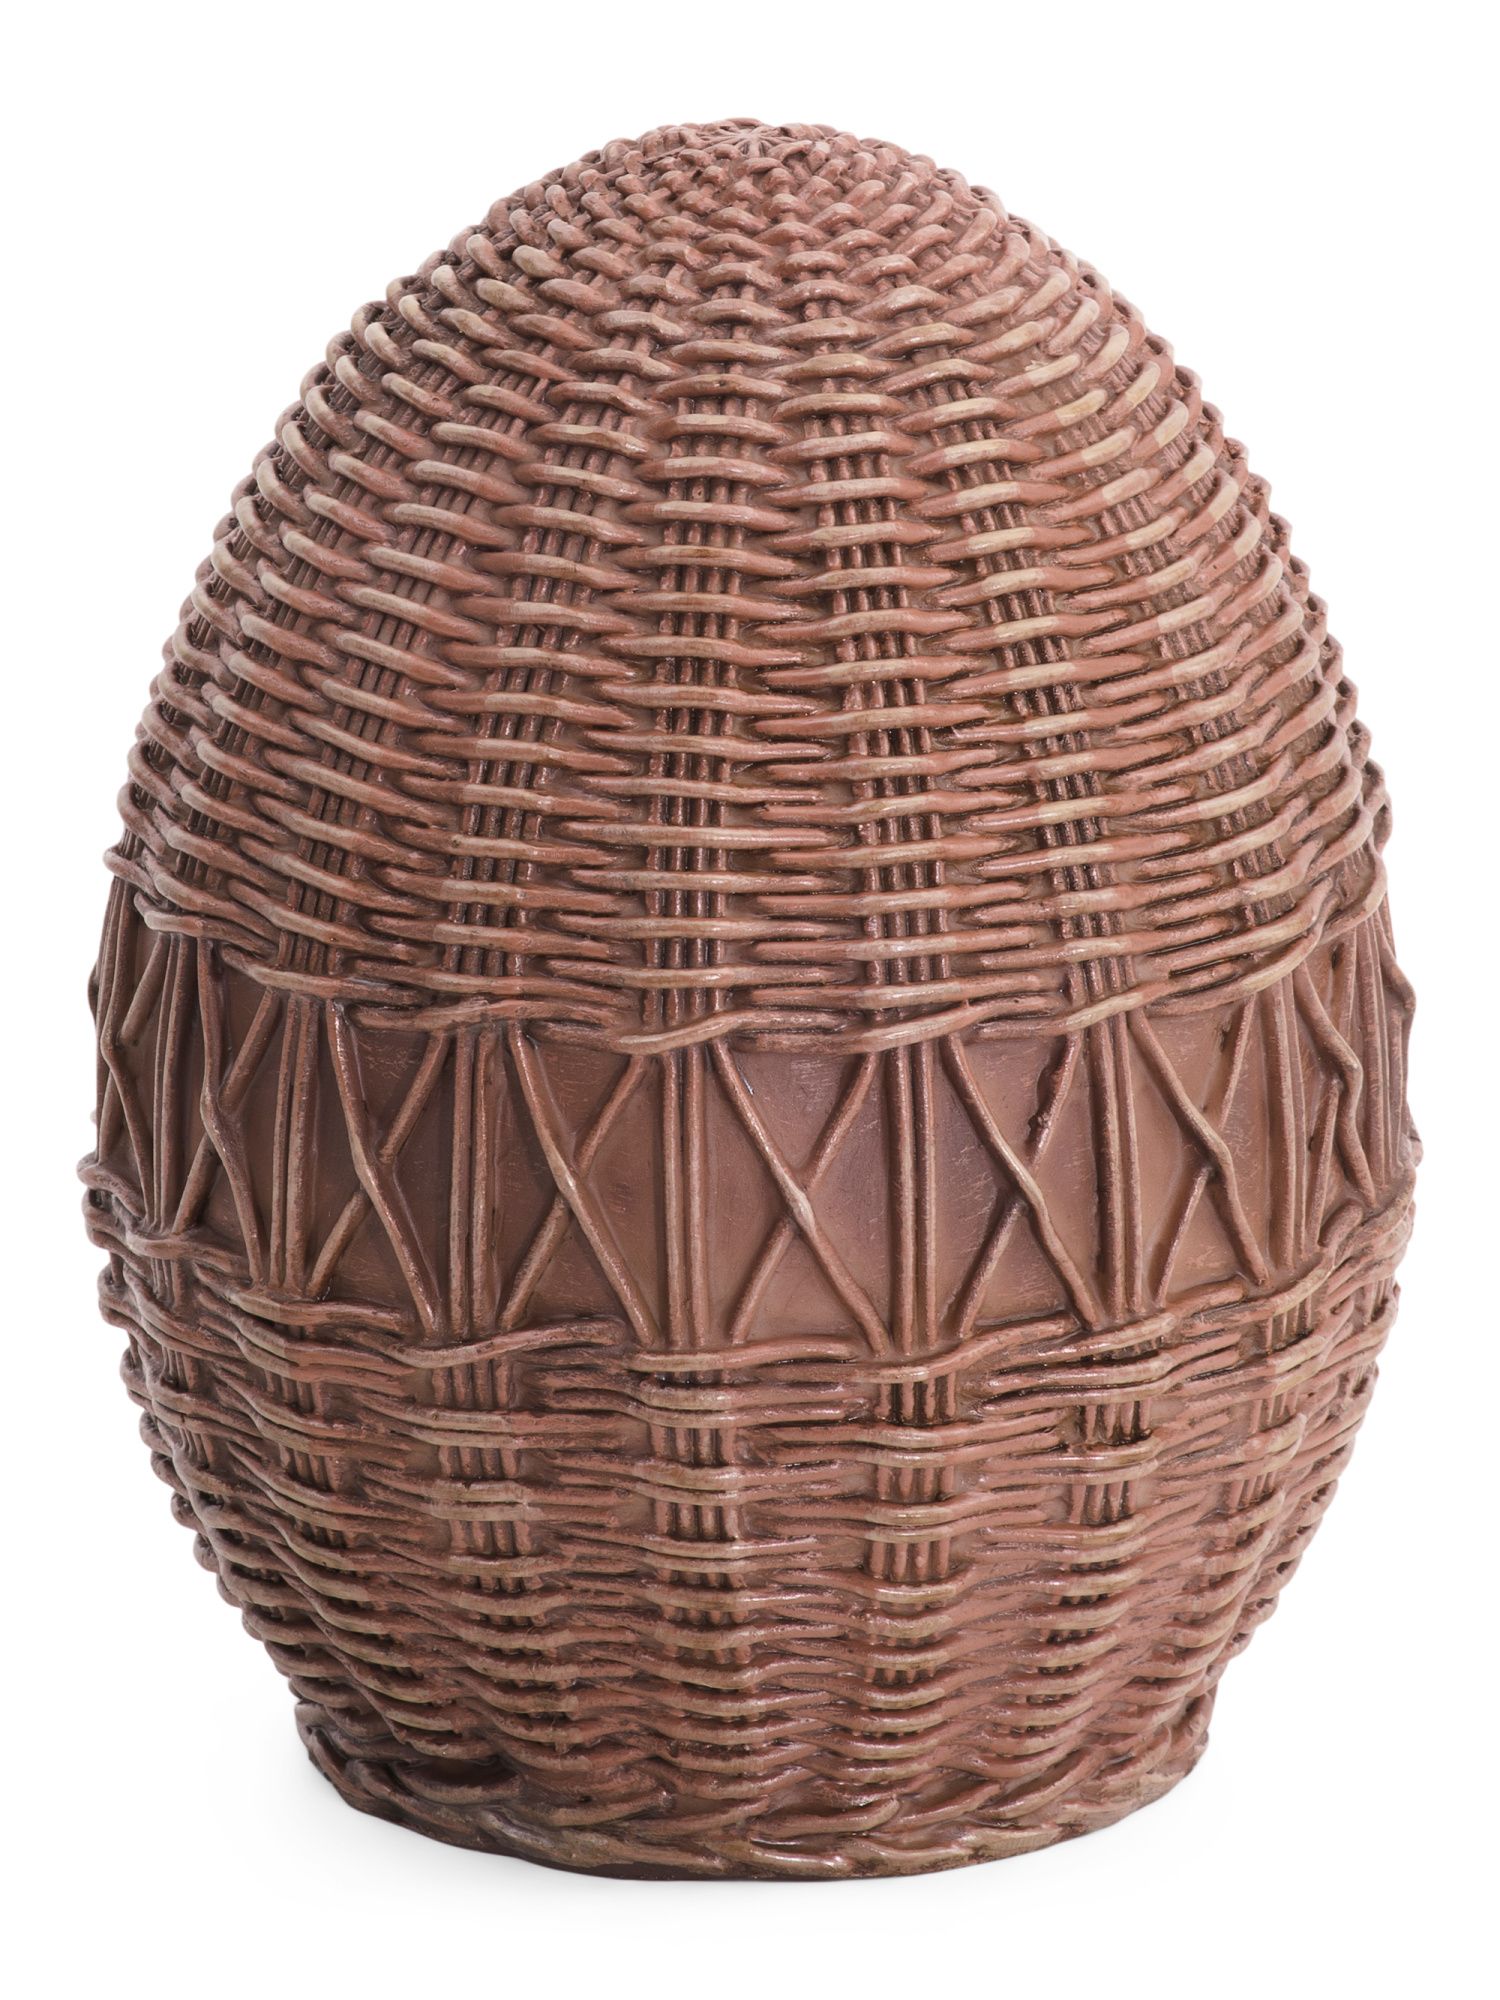 8in Resin Rattan Look Easter Egg Decor | TJ Maxx